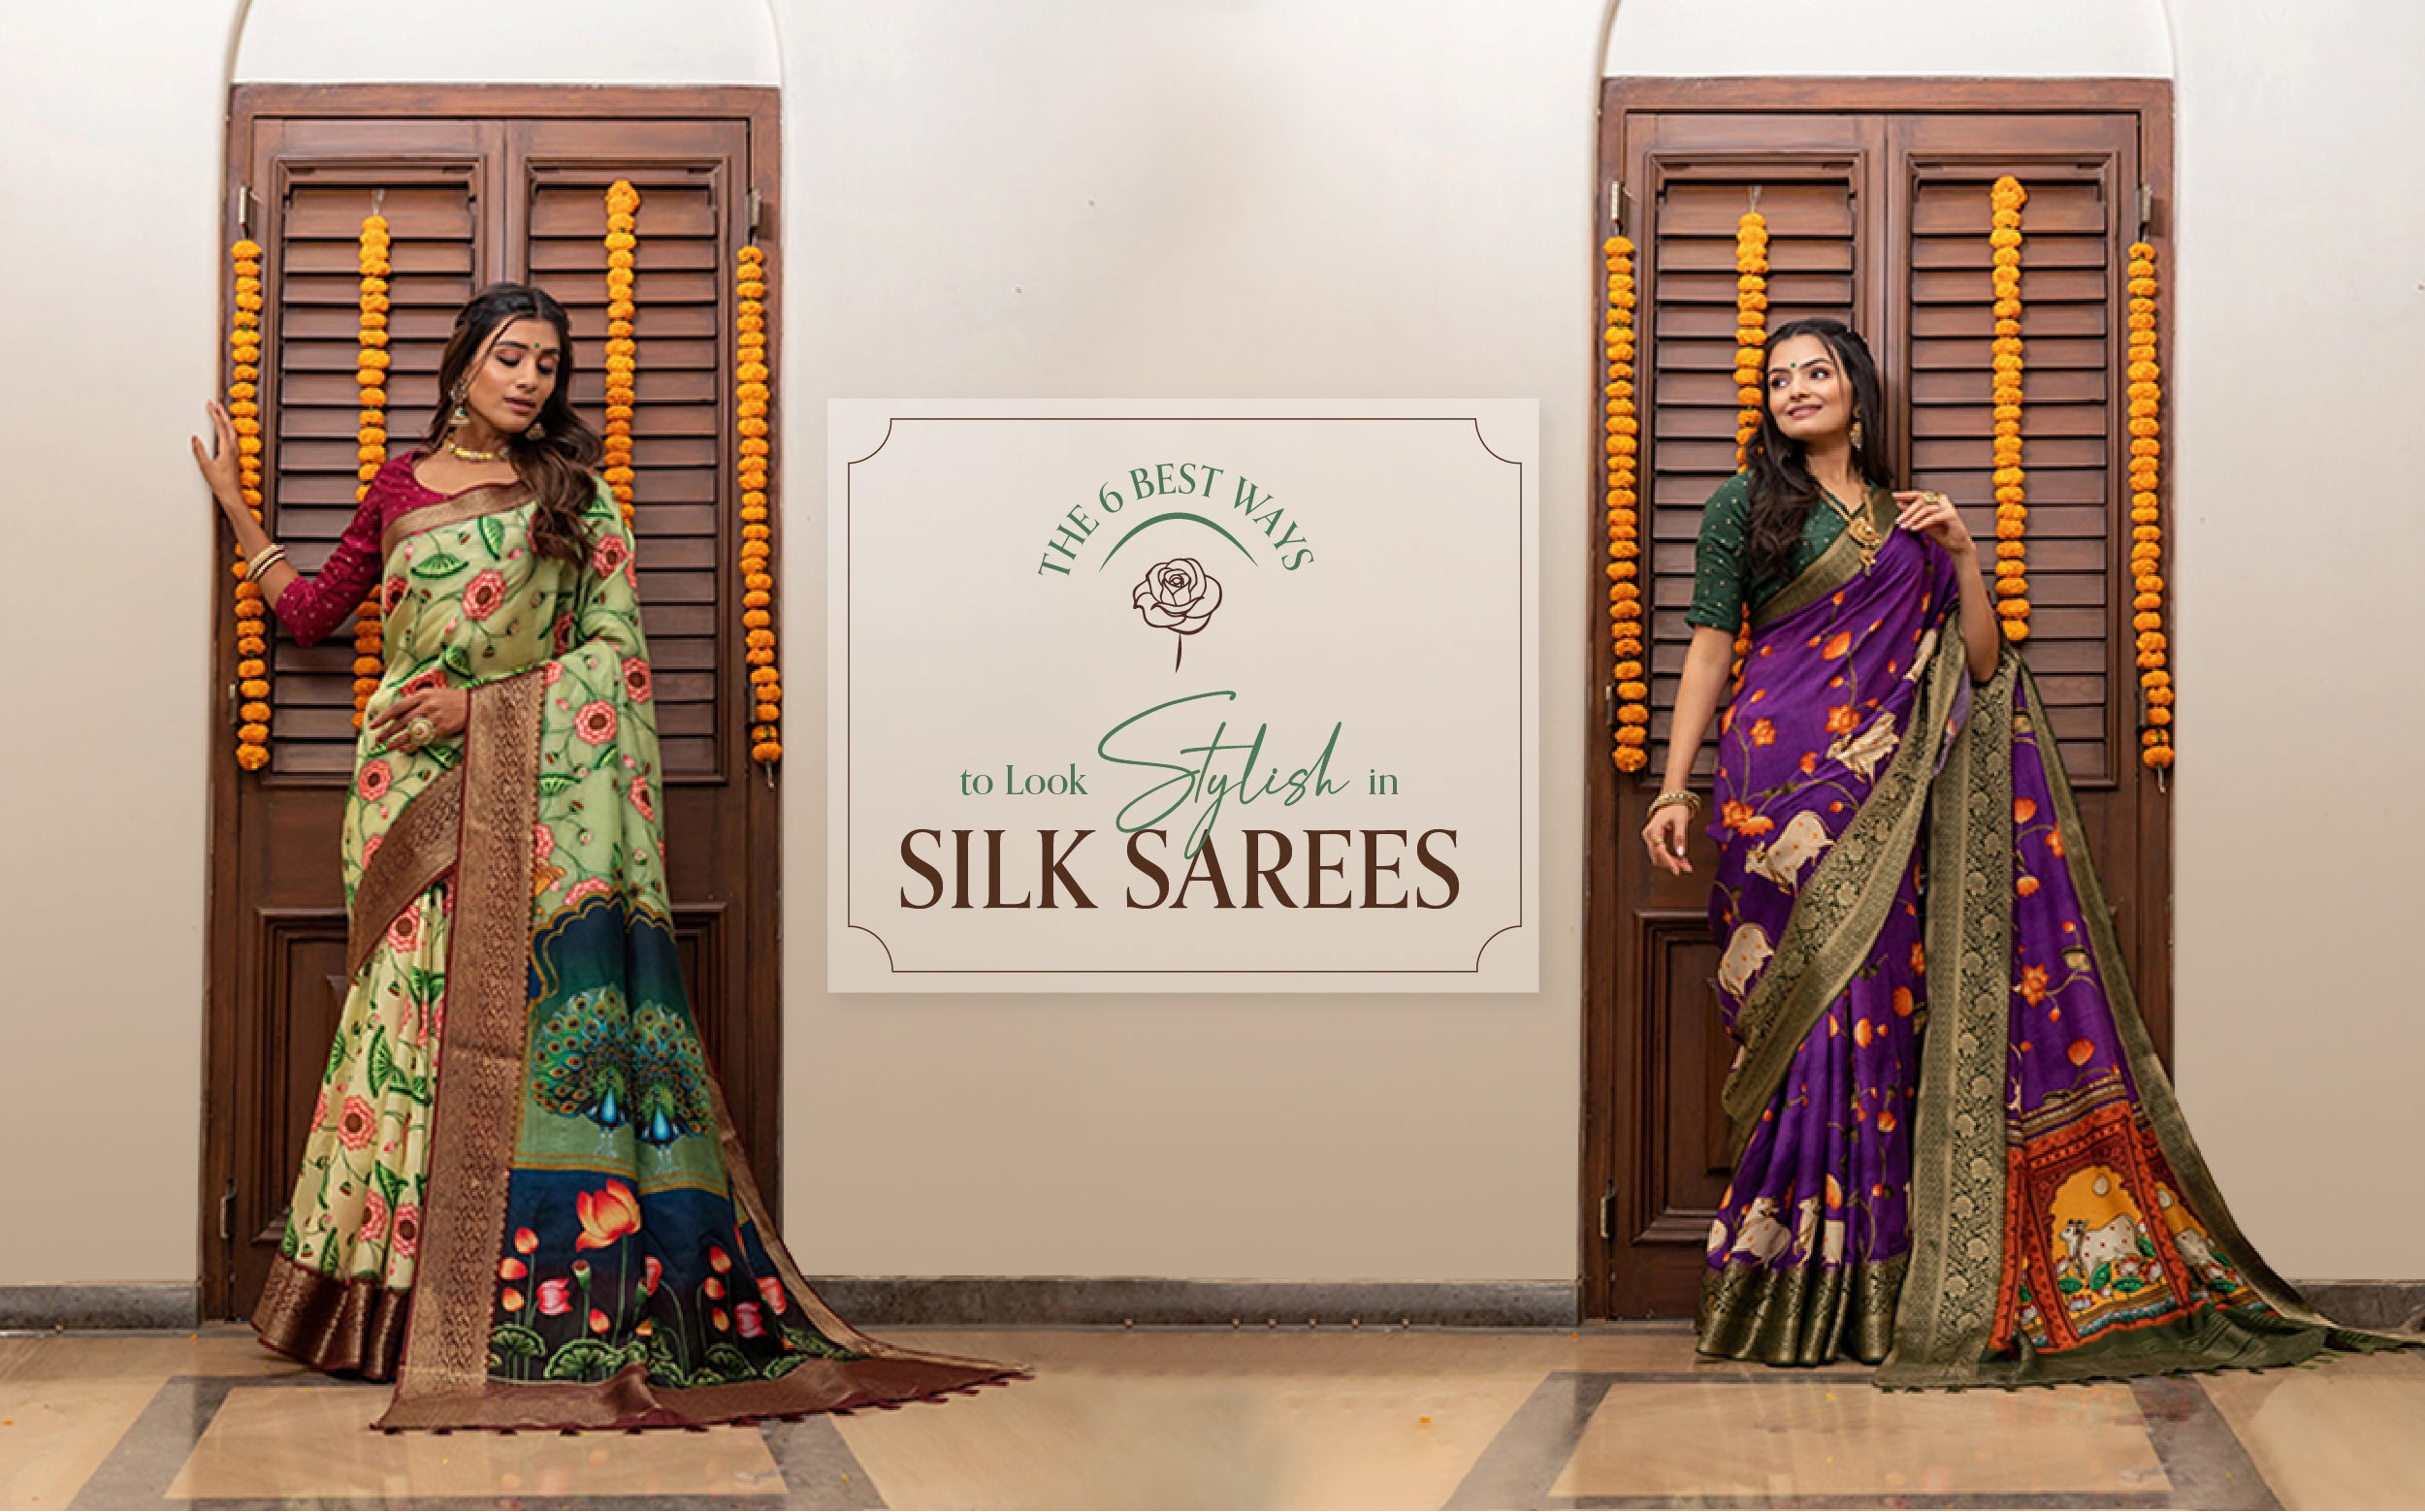 6 Best Ways to Look Stylish in Silk Sarees